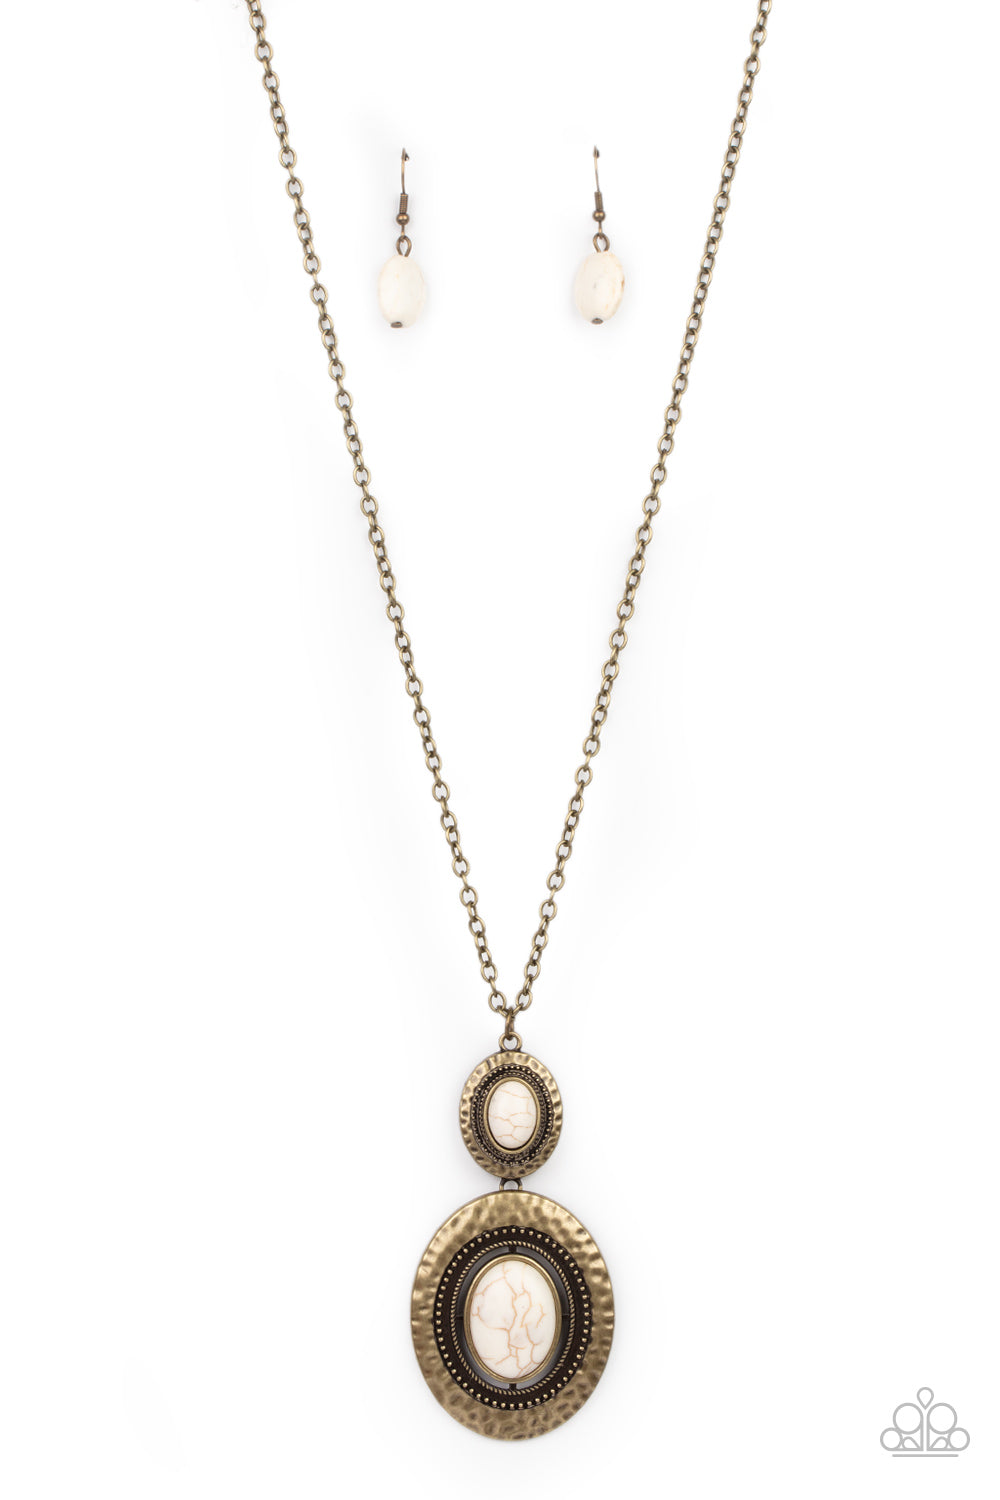 Southern Opera Brass Necklace Paparazzi Accessories $5 Jewelry. Free Shipping! #P2SE-BRXX-118XX